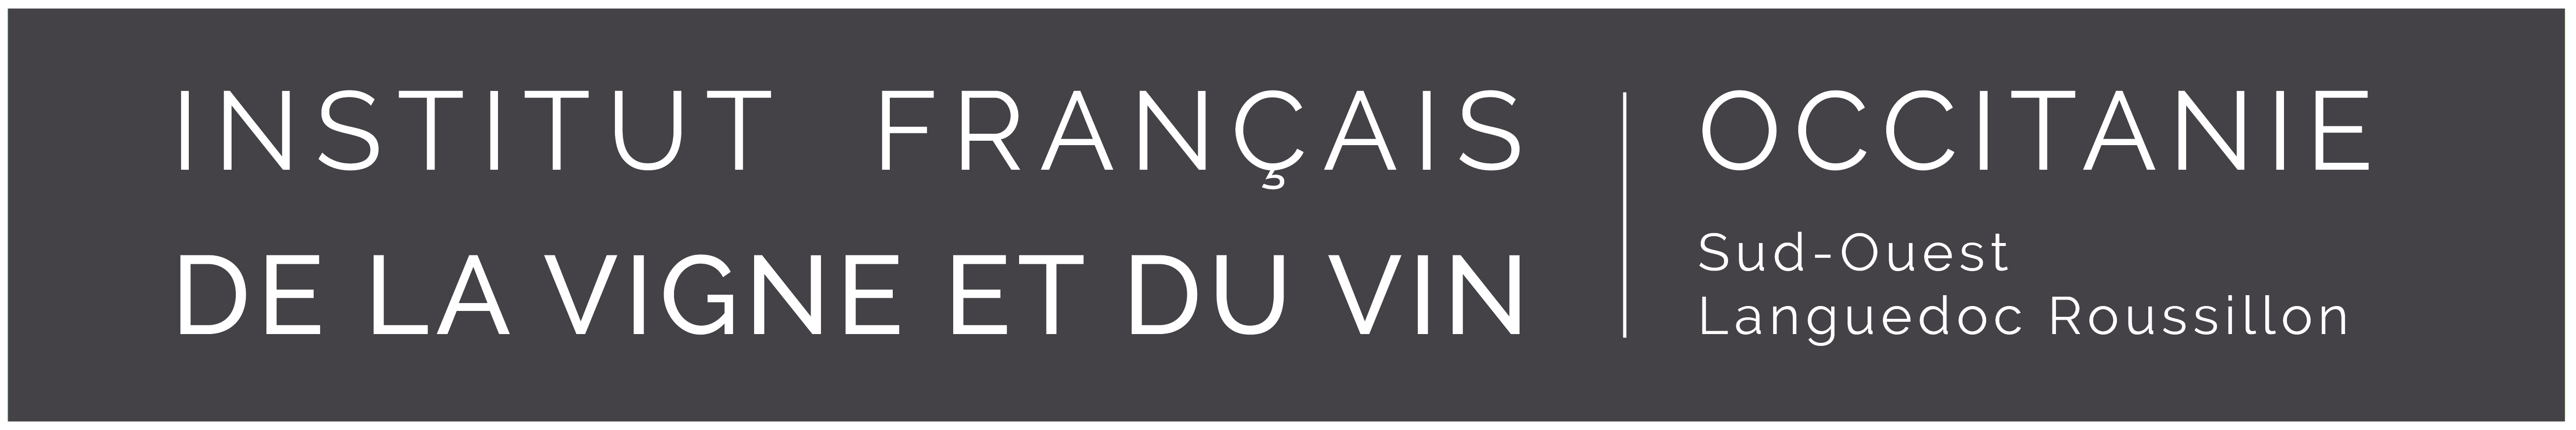 IFV Occitanie